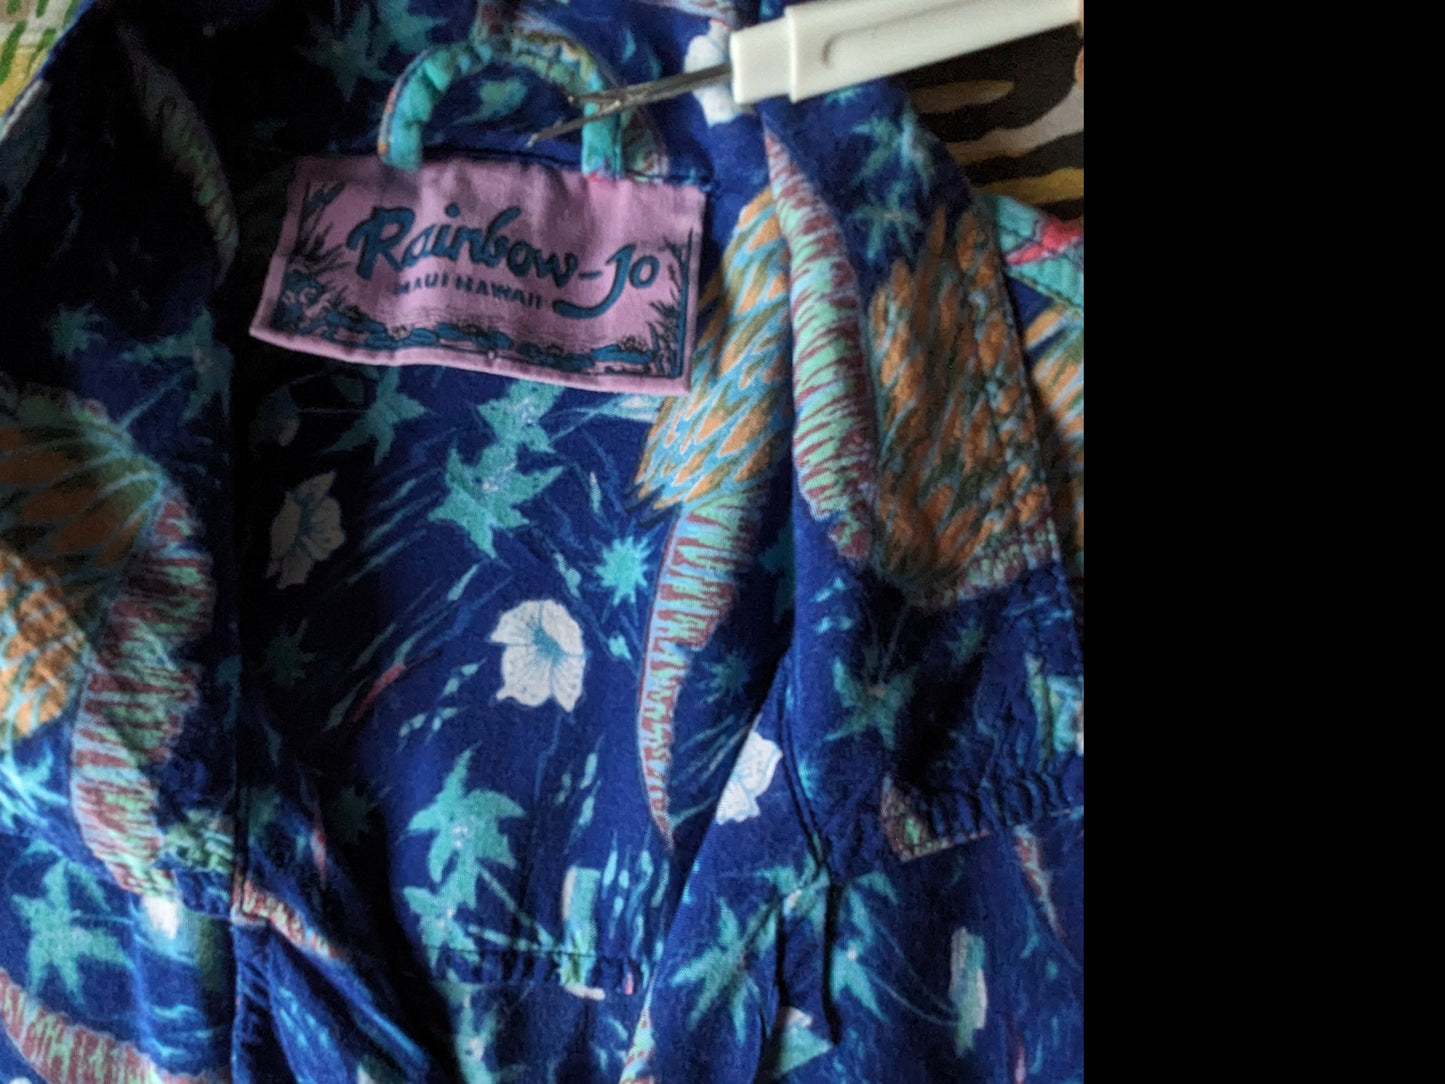 Rainbow Jo Maui Original Hawaii Hemd Kurzarm. Blau orange Pinkgrüner Druck. Größe xl.